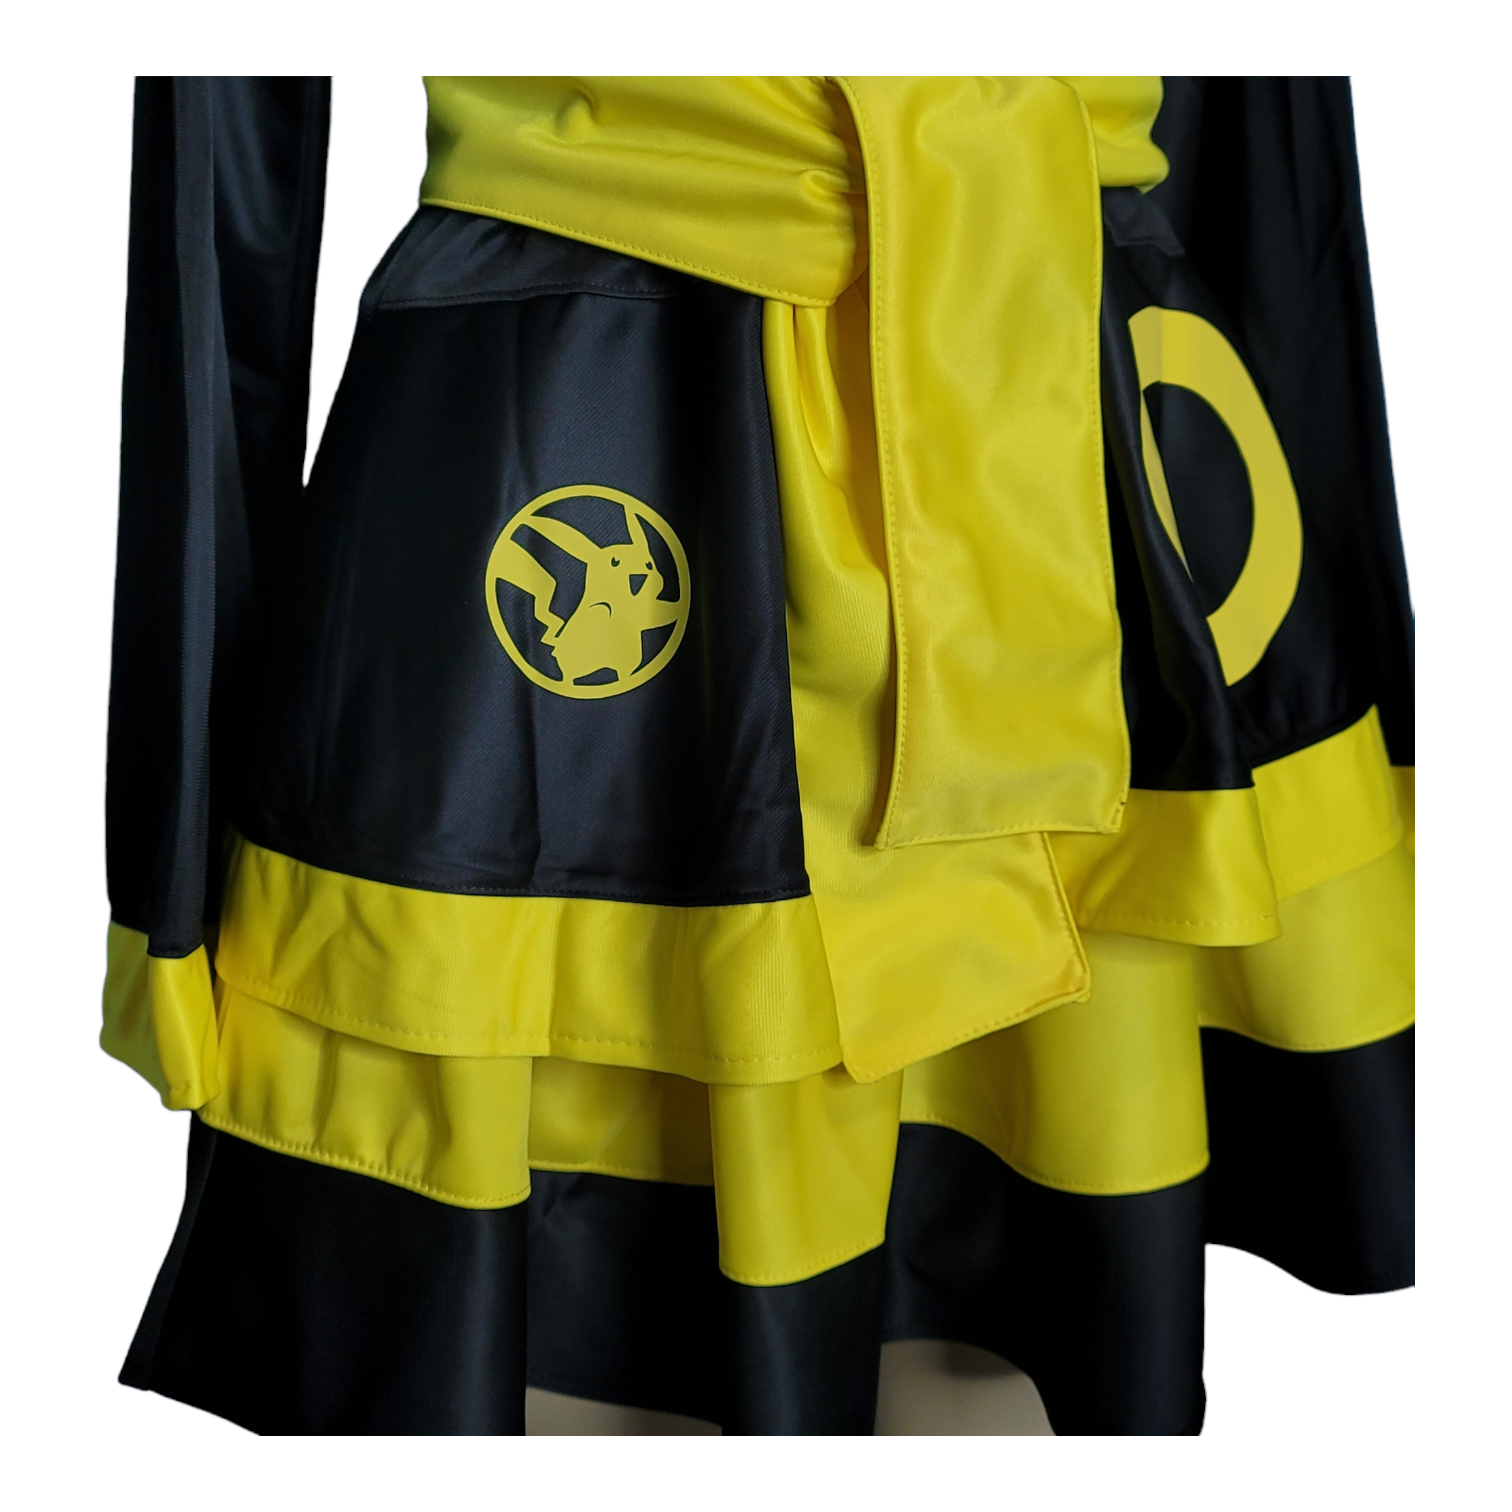 Yukata Dress Cosplay Electric Yellow Pocket Monster